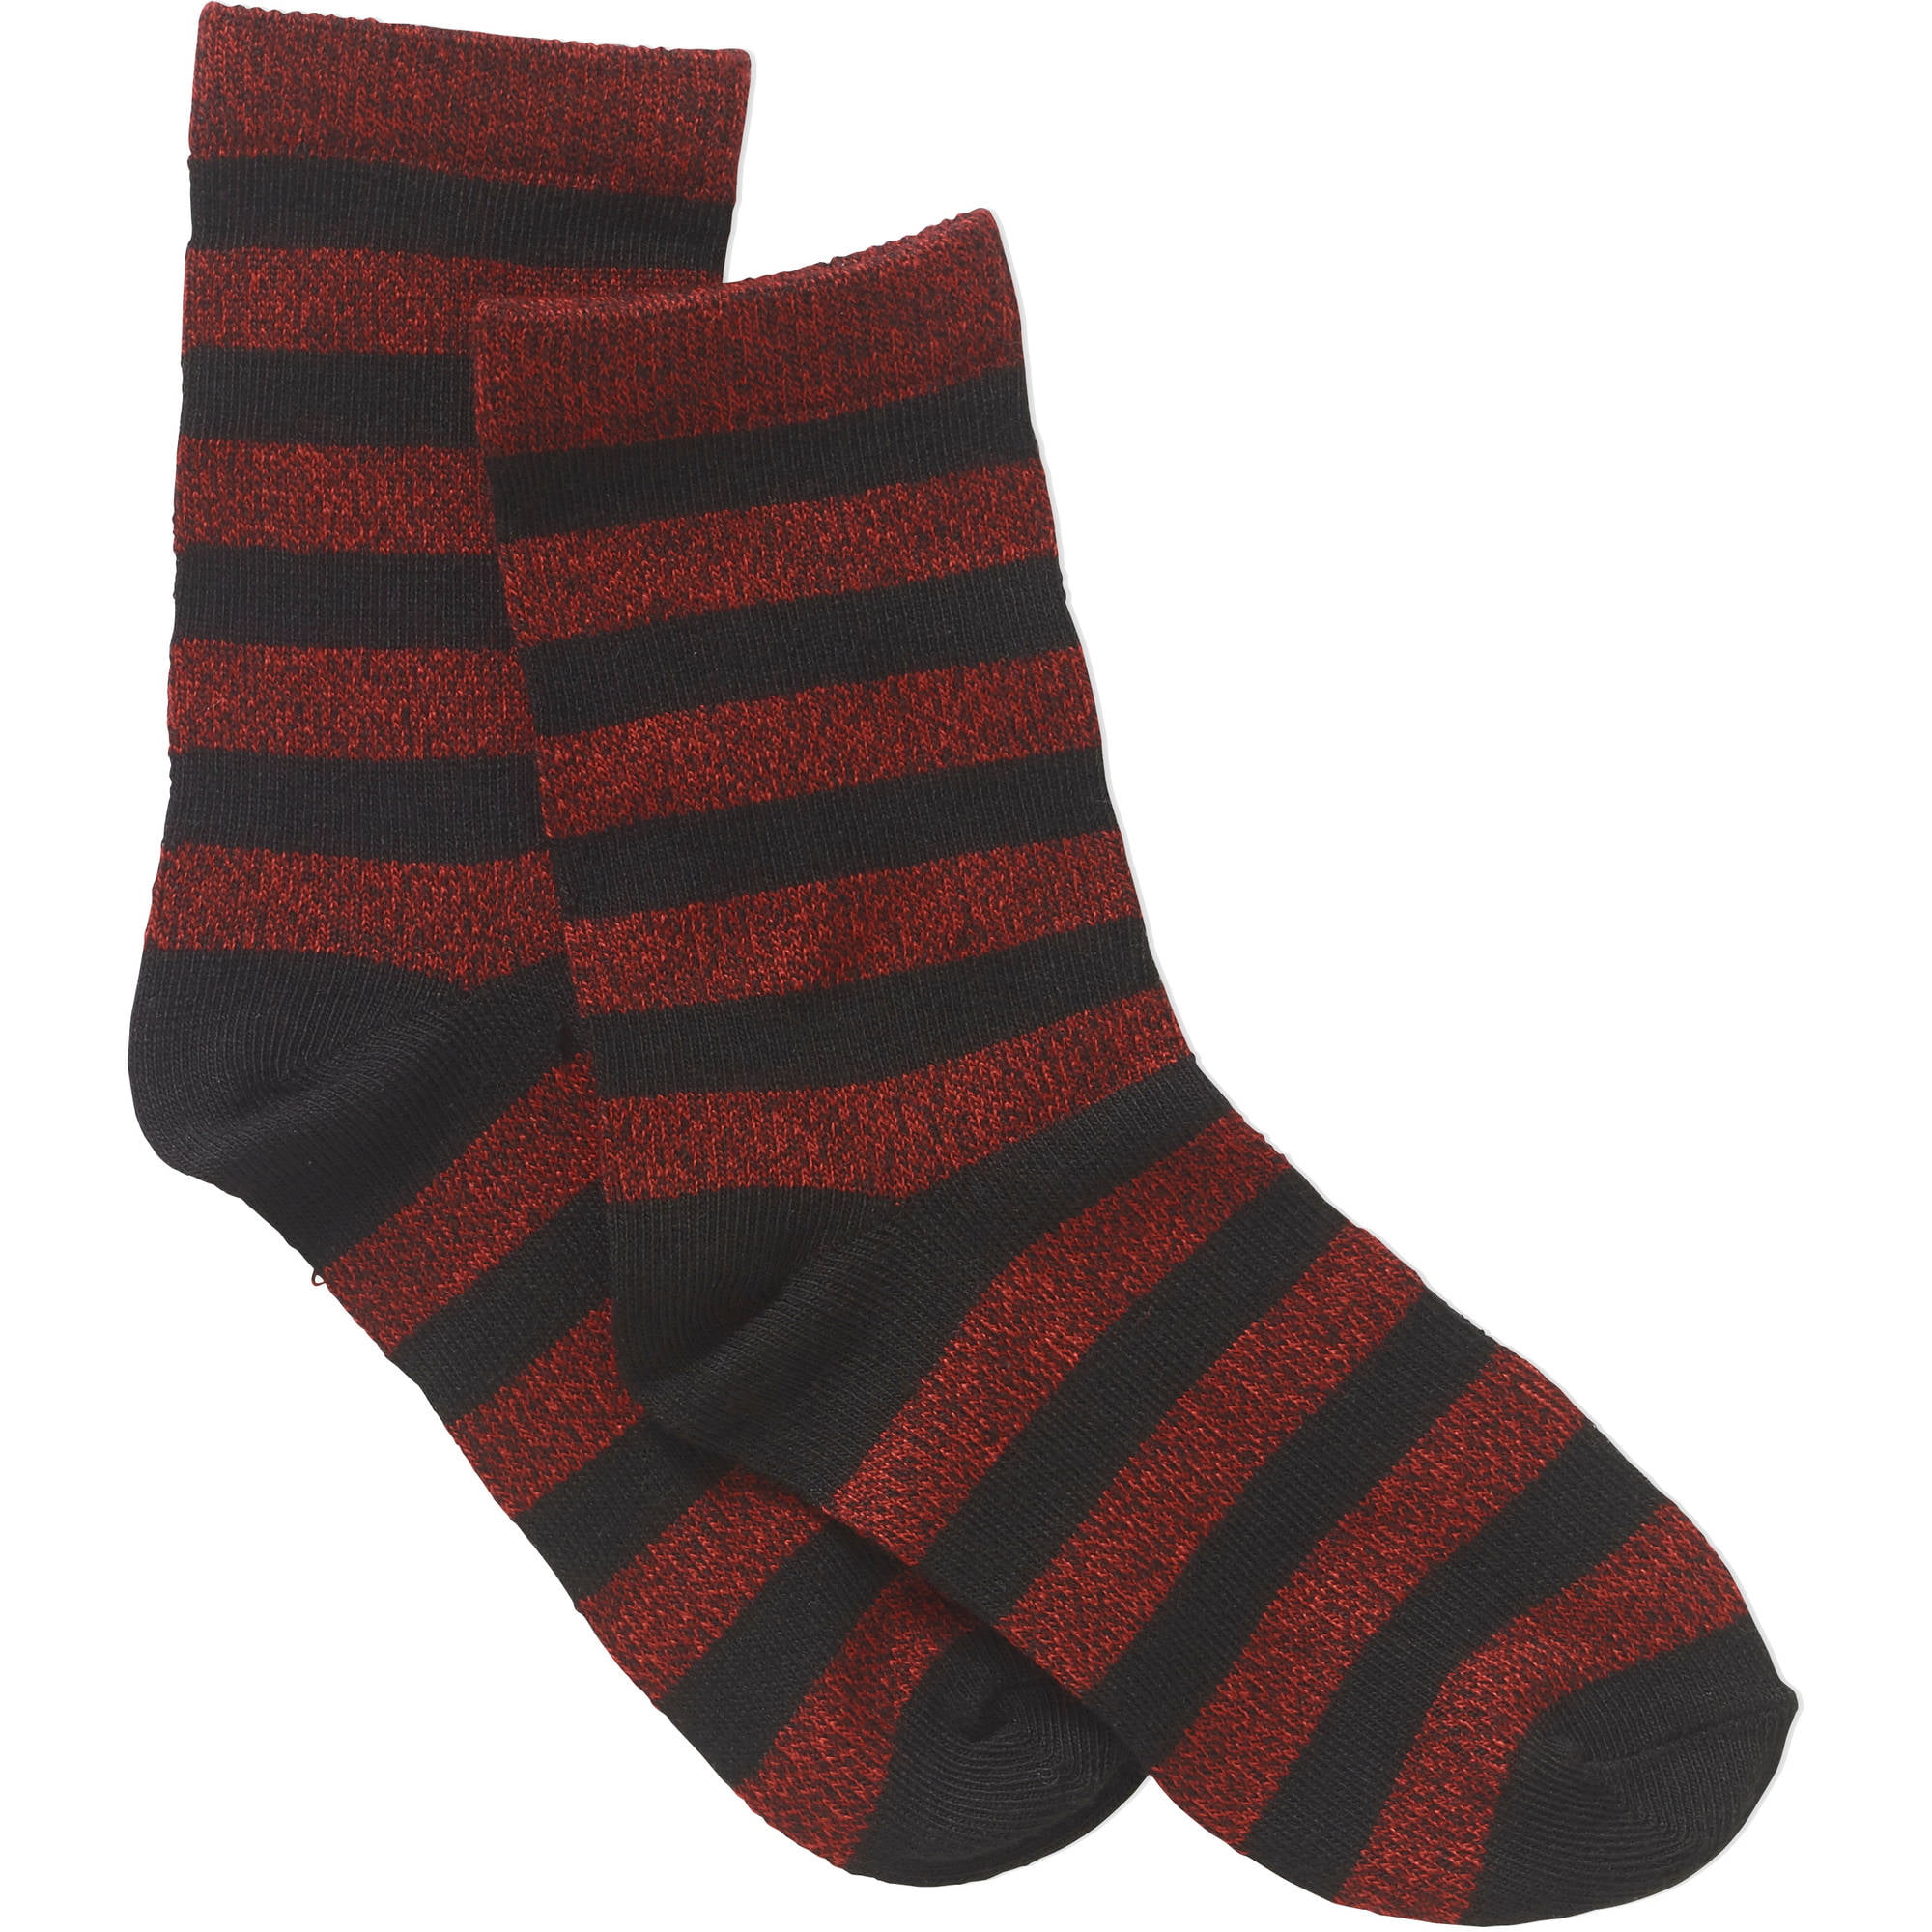 Boys Crew Marled Stripe Socks, 7 Pack - Walmart.com